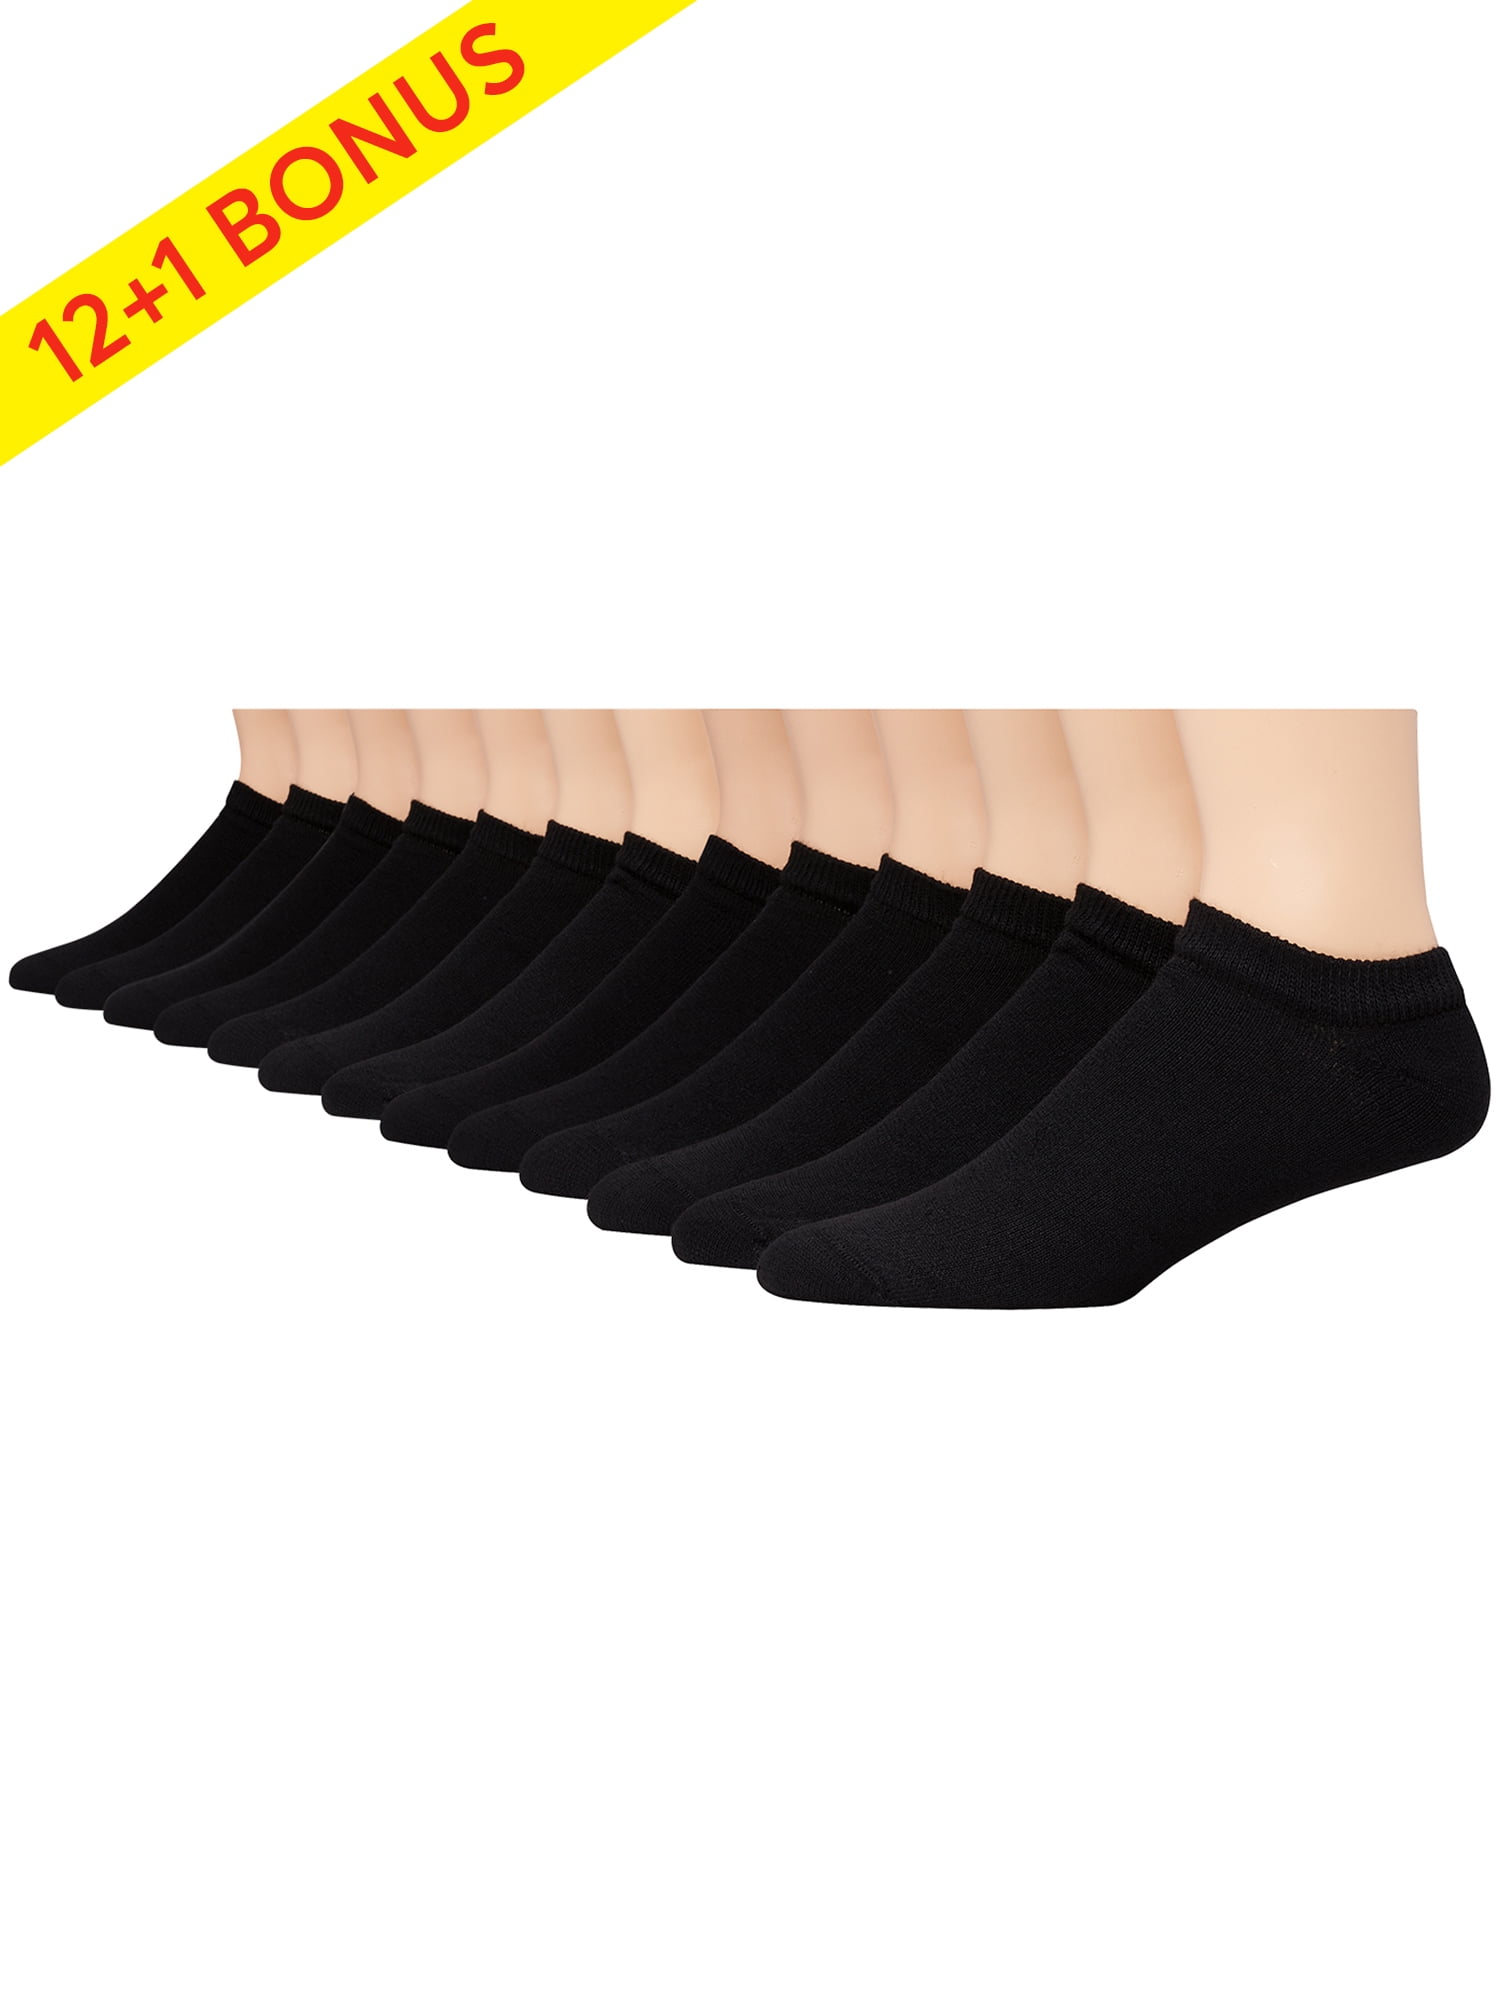 Hanes Men's Cushion No Show Socks, Size 6-12, 6 pairs - The Fresh